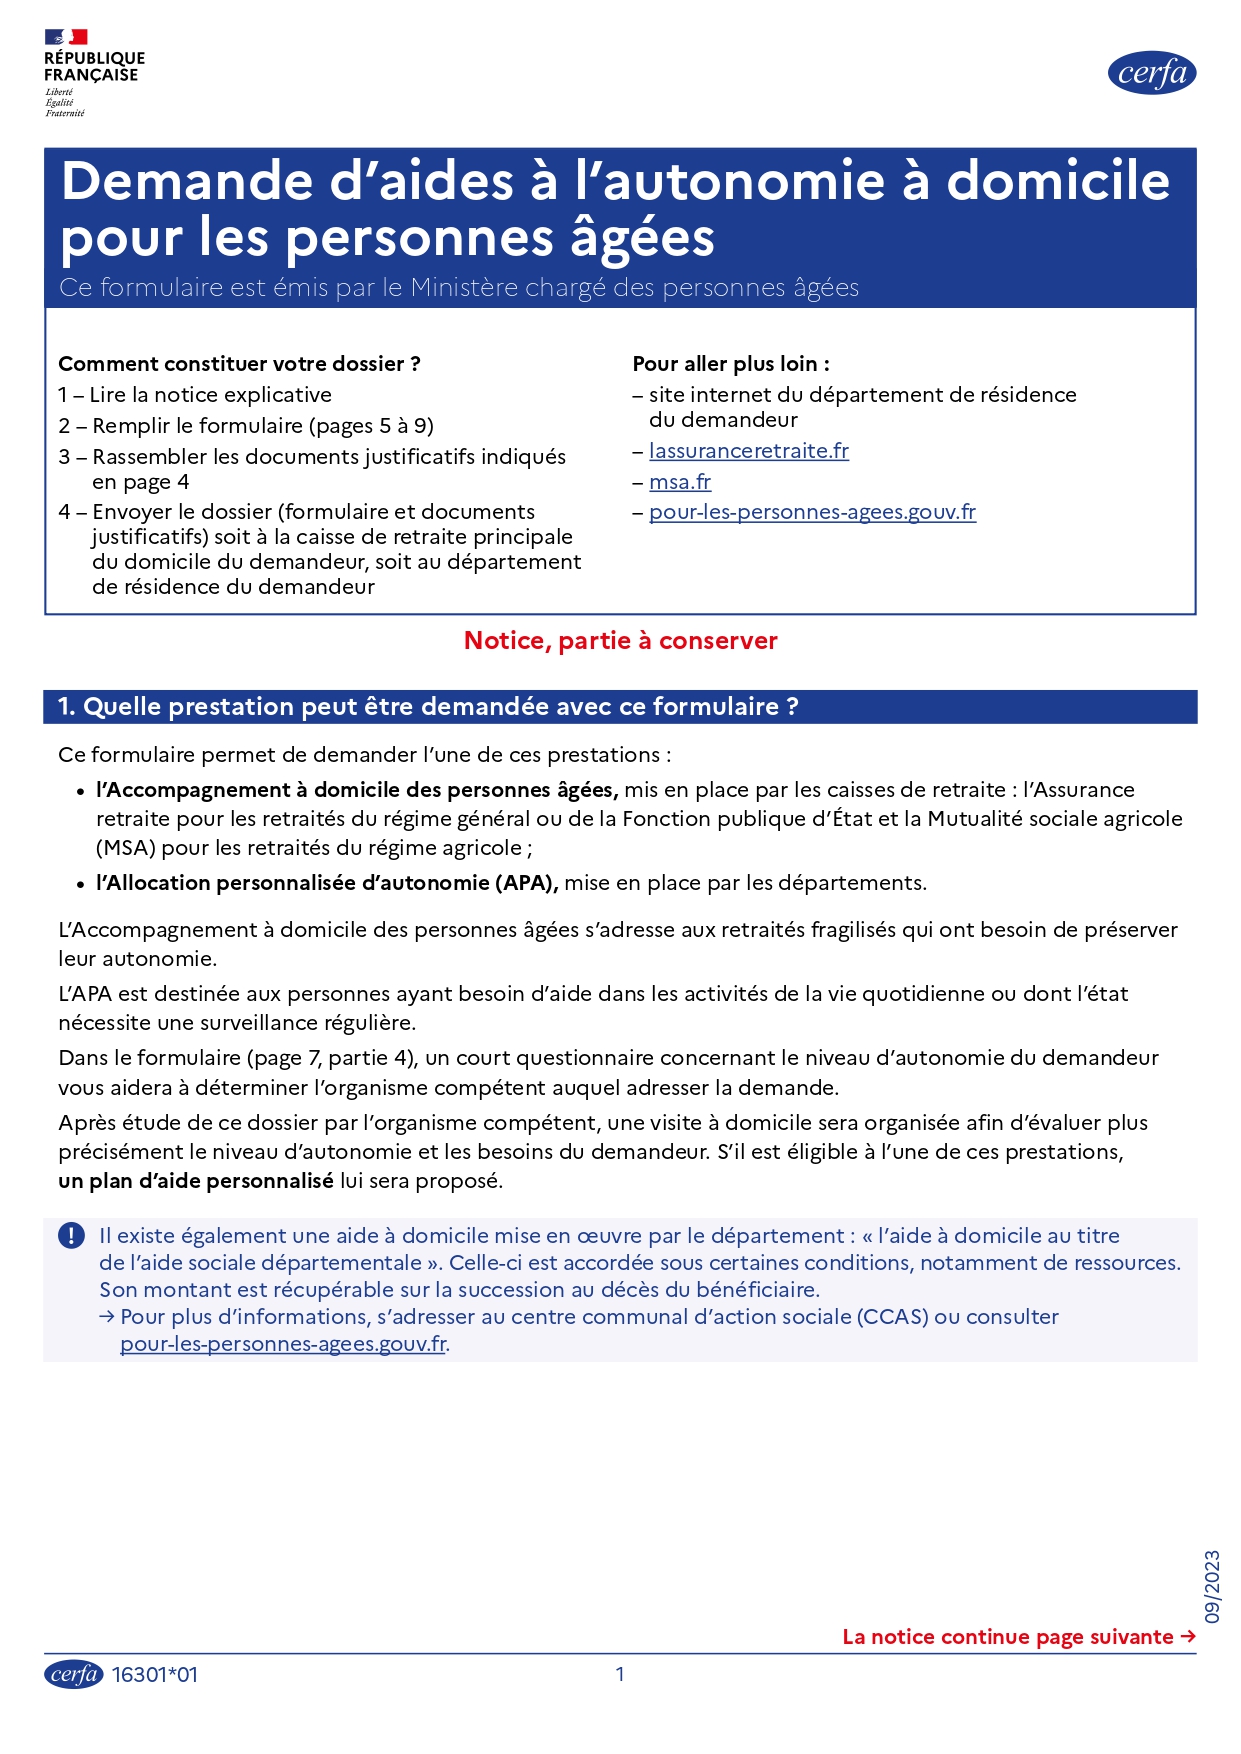 Formulaire_demande_autonomie_cerfa_16301-01 apa.pdf